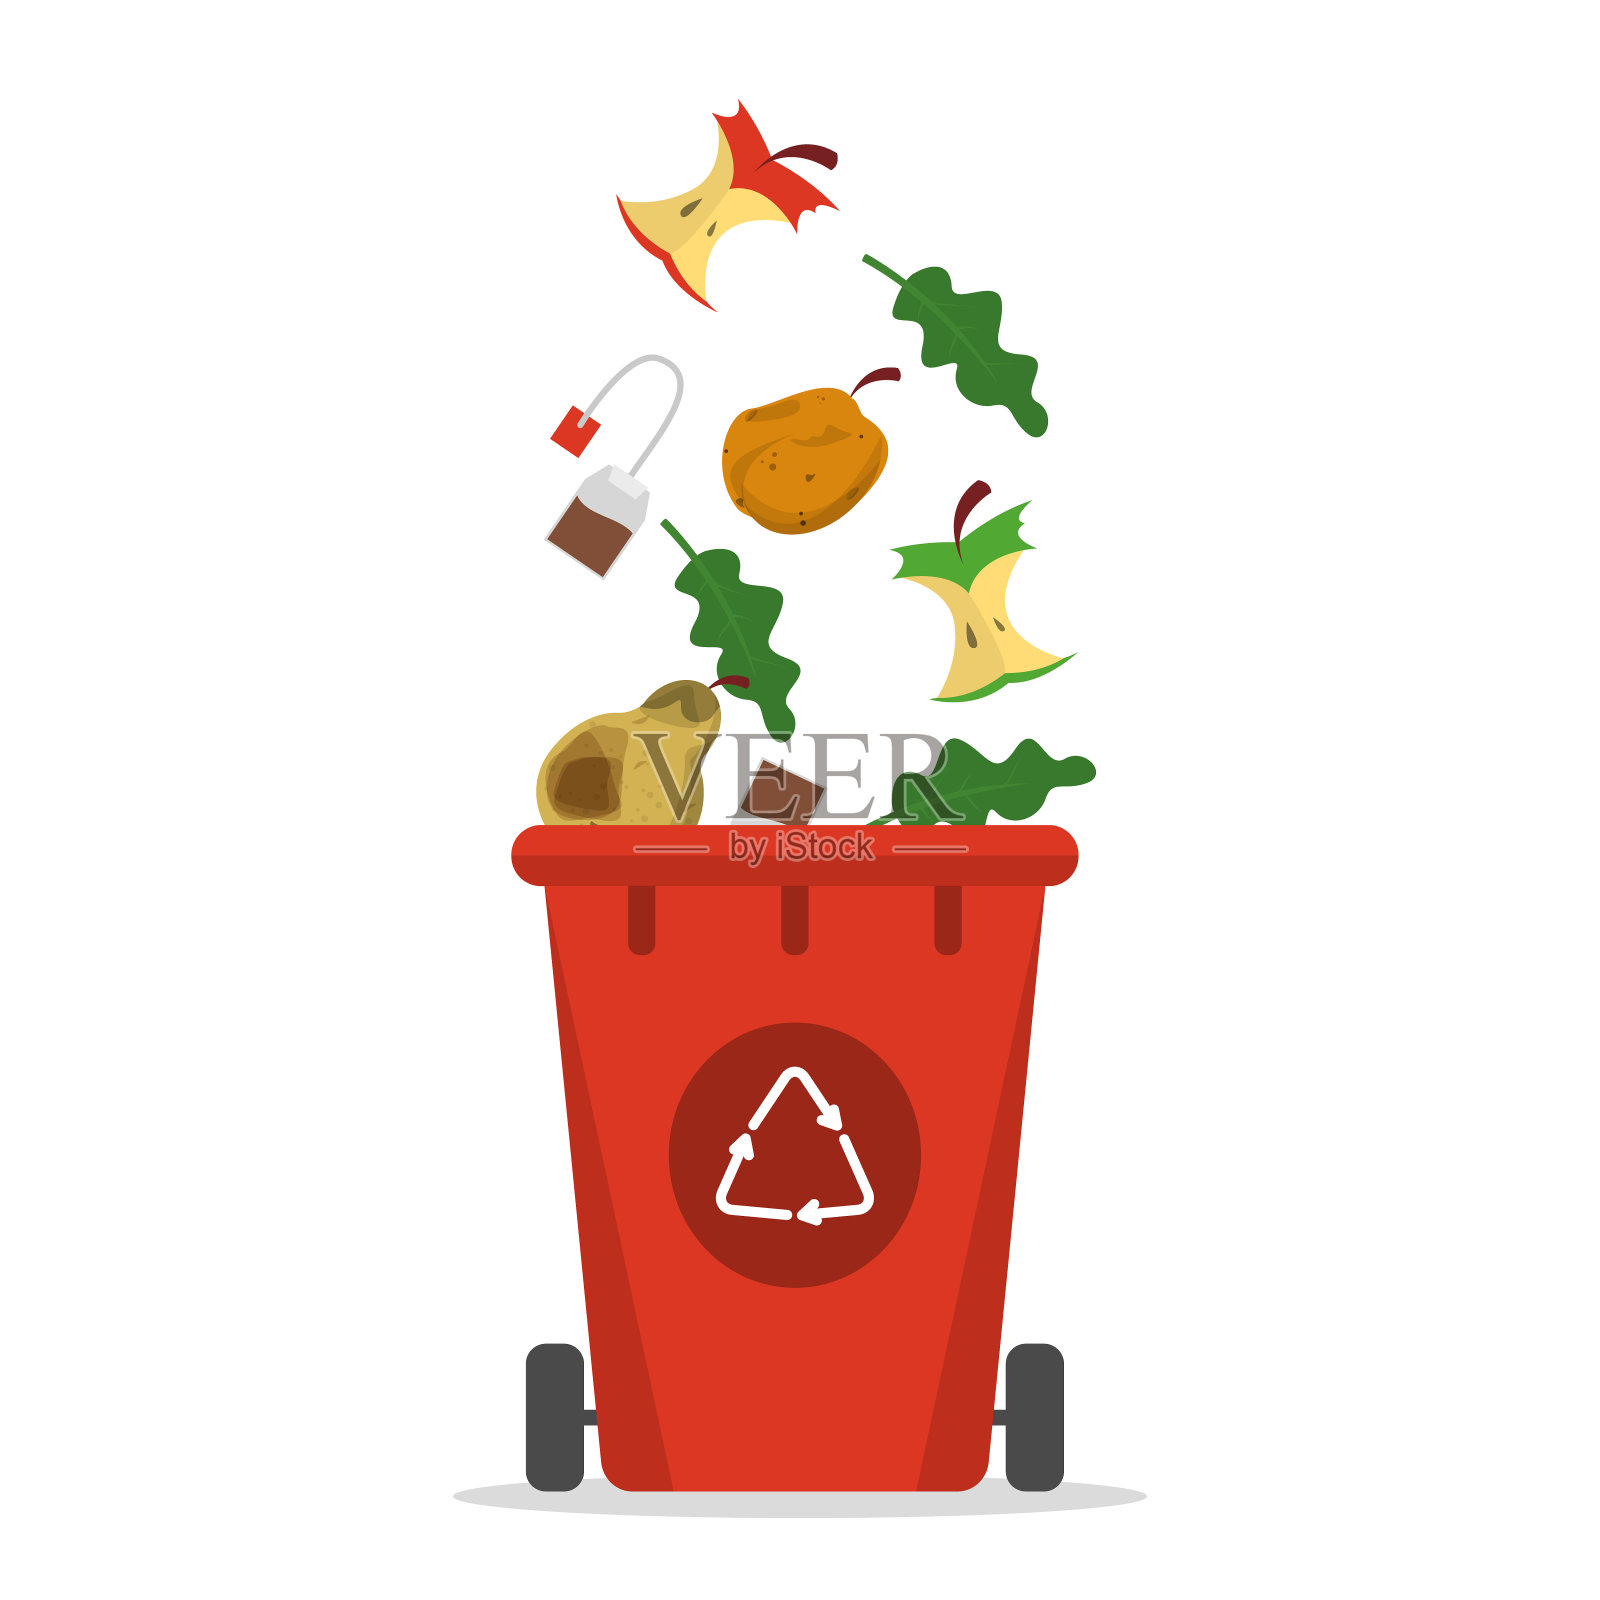 Organic waste falling in the trash bin vector isolated设计元素图片